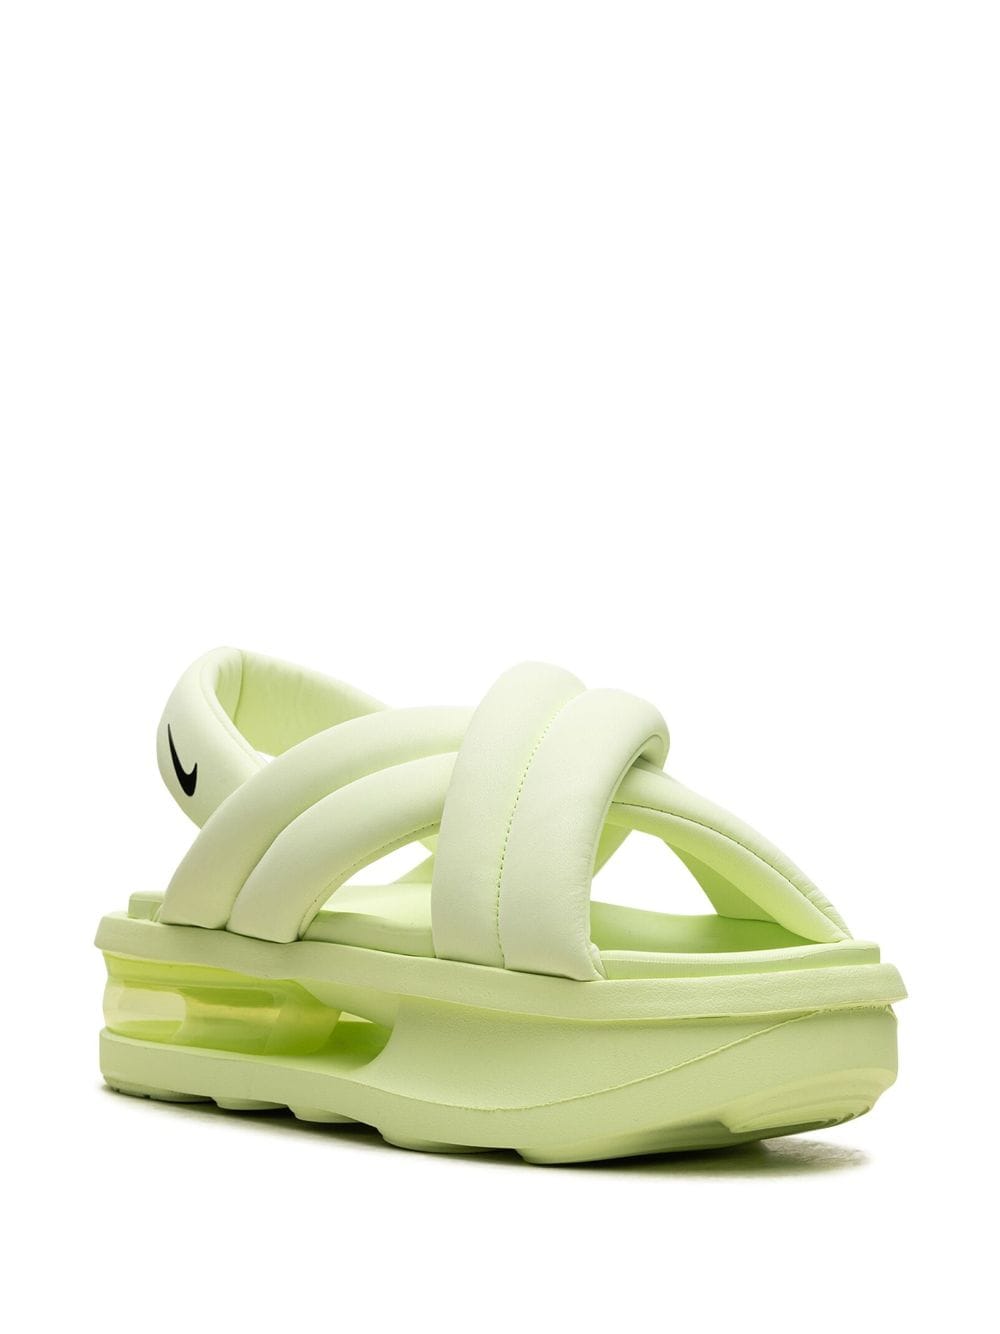 Nike Air Max Isla "Barely Volt" sandals - Groen